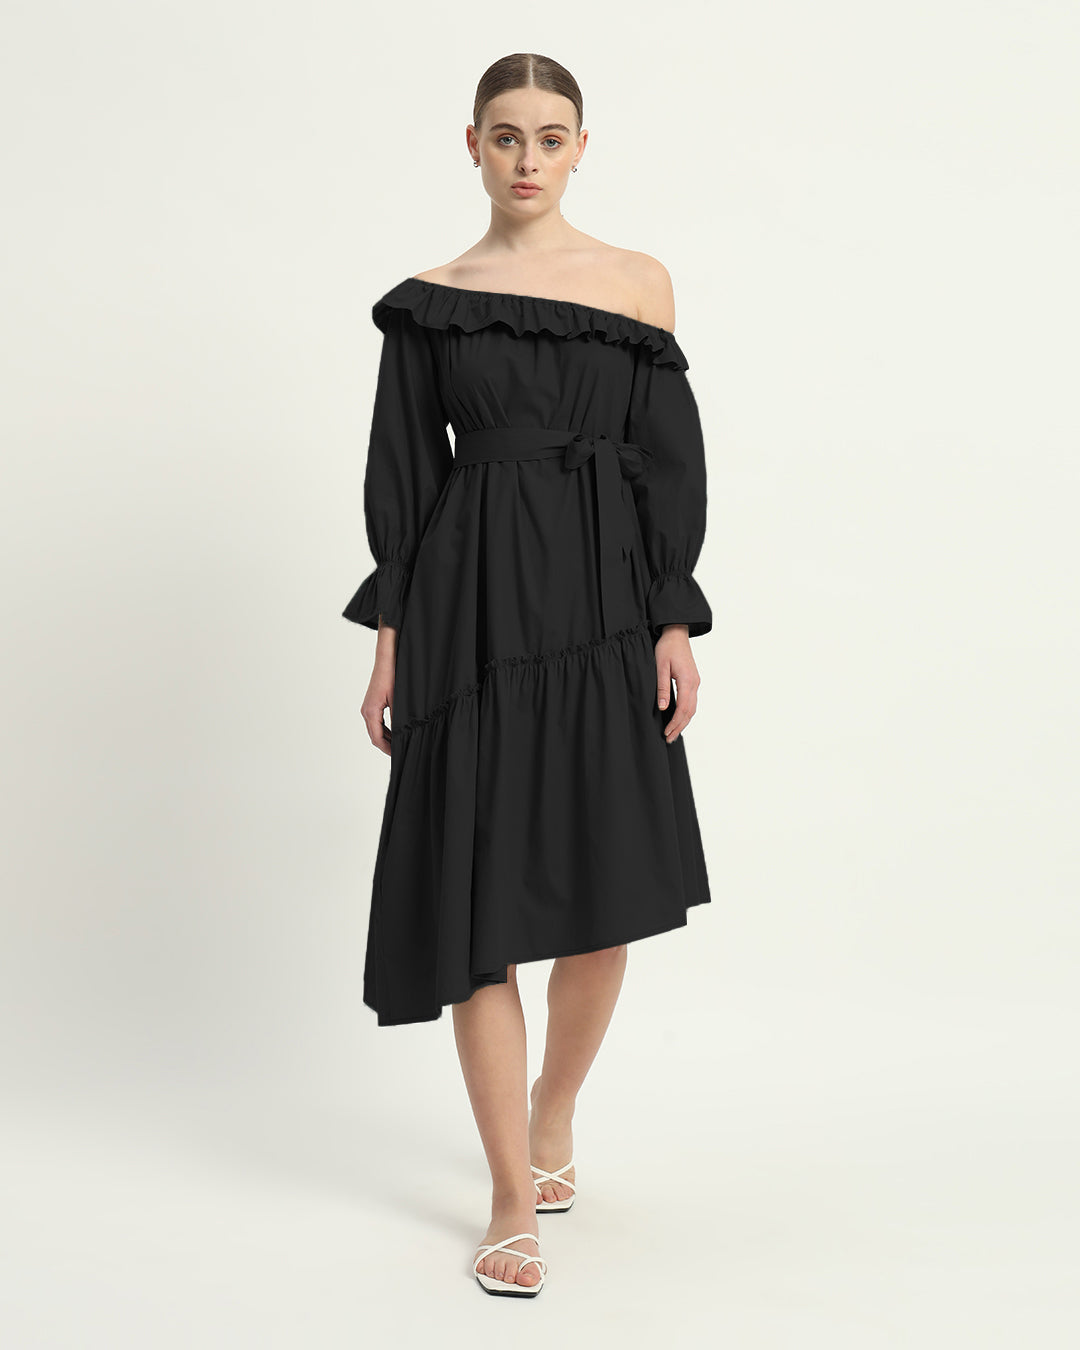 The Noir Stellata Cotton Dress